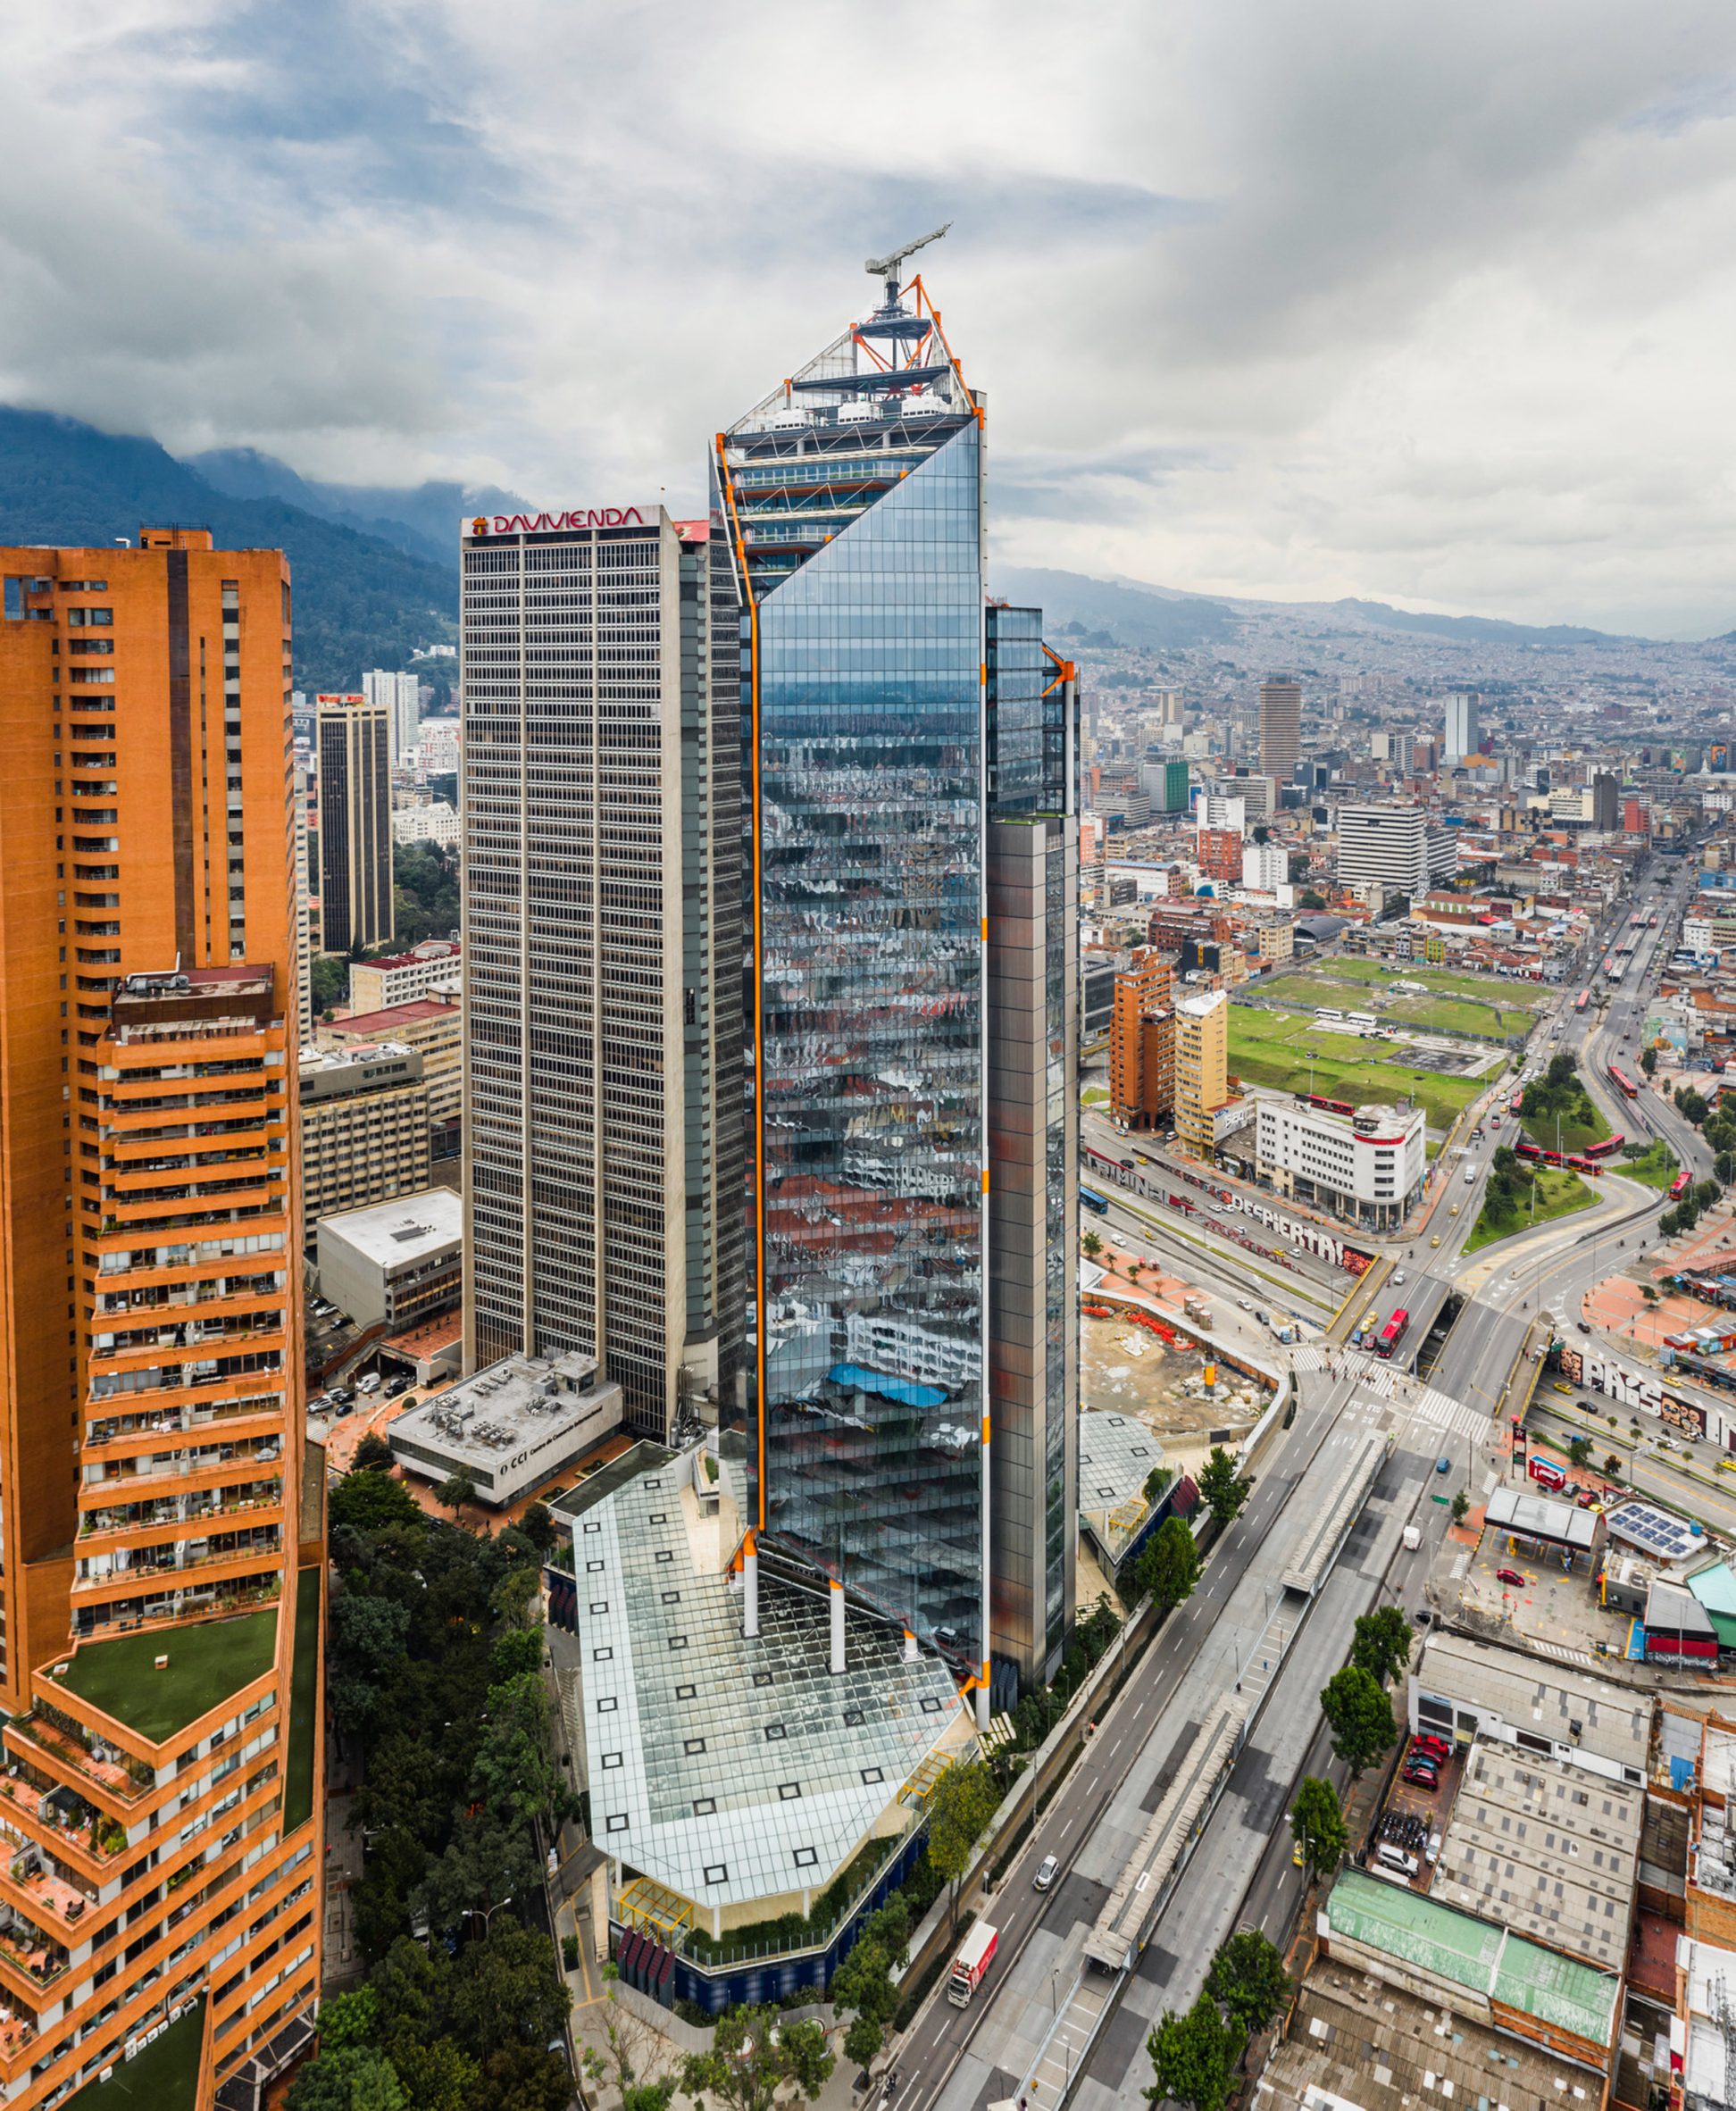 Atrio tower in Bogotá